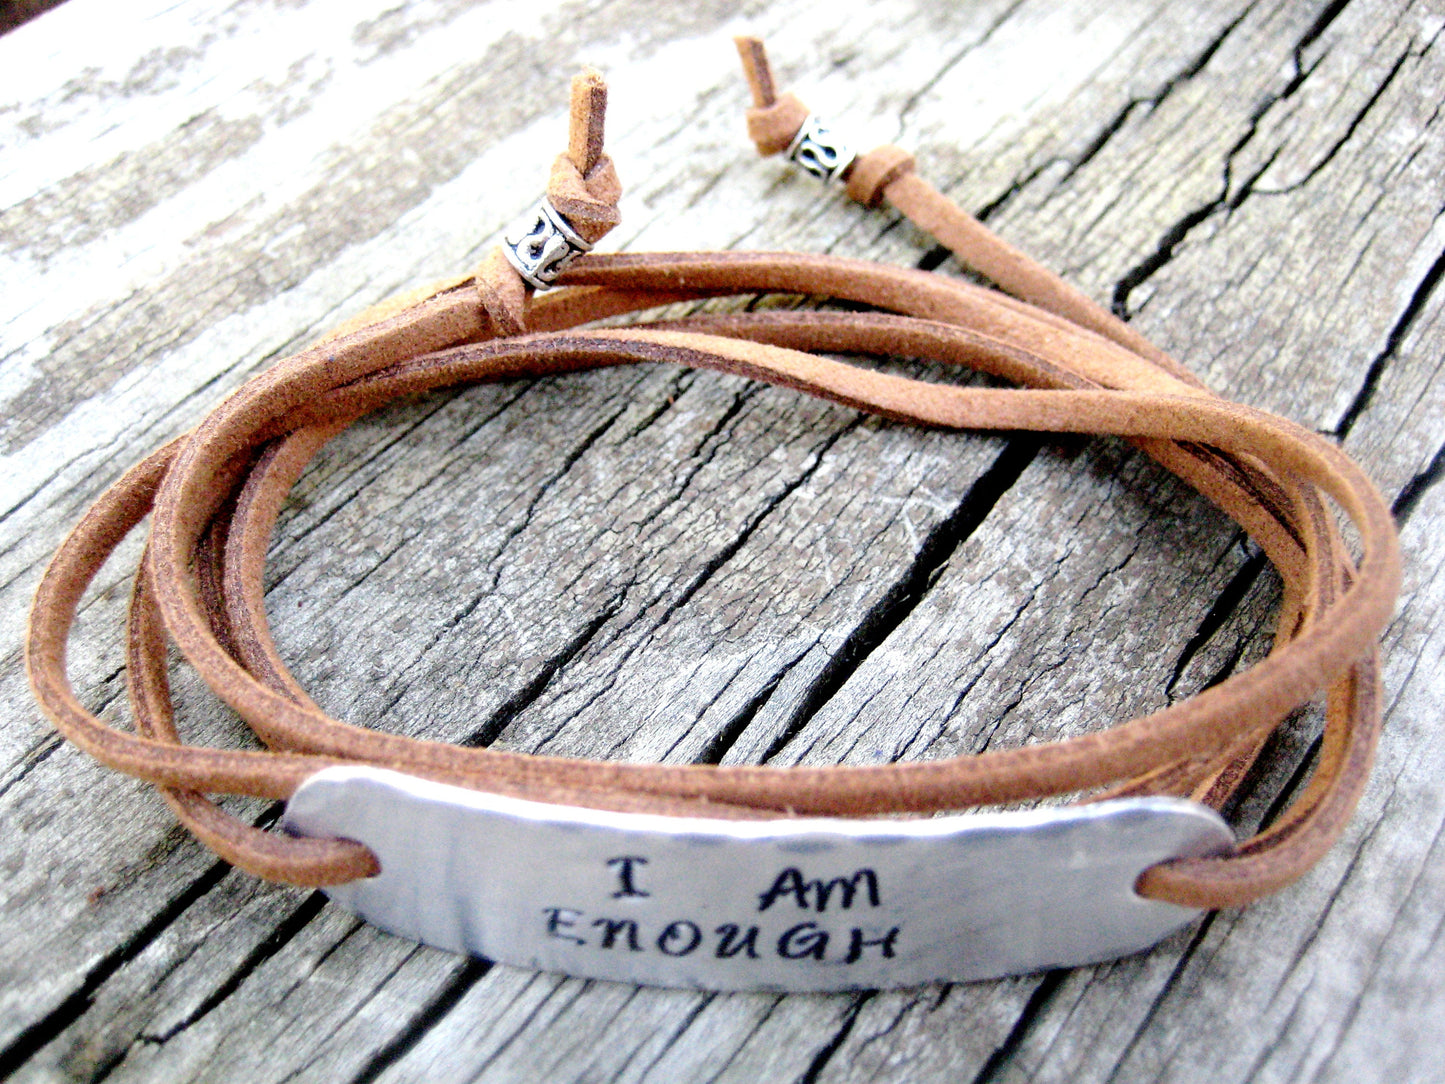 Personalized Bracelet Wrap, I Am Enough, Encouragement Bracelet, Bracelet With Words, Encouragement Gift, Motivational Bracelet